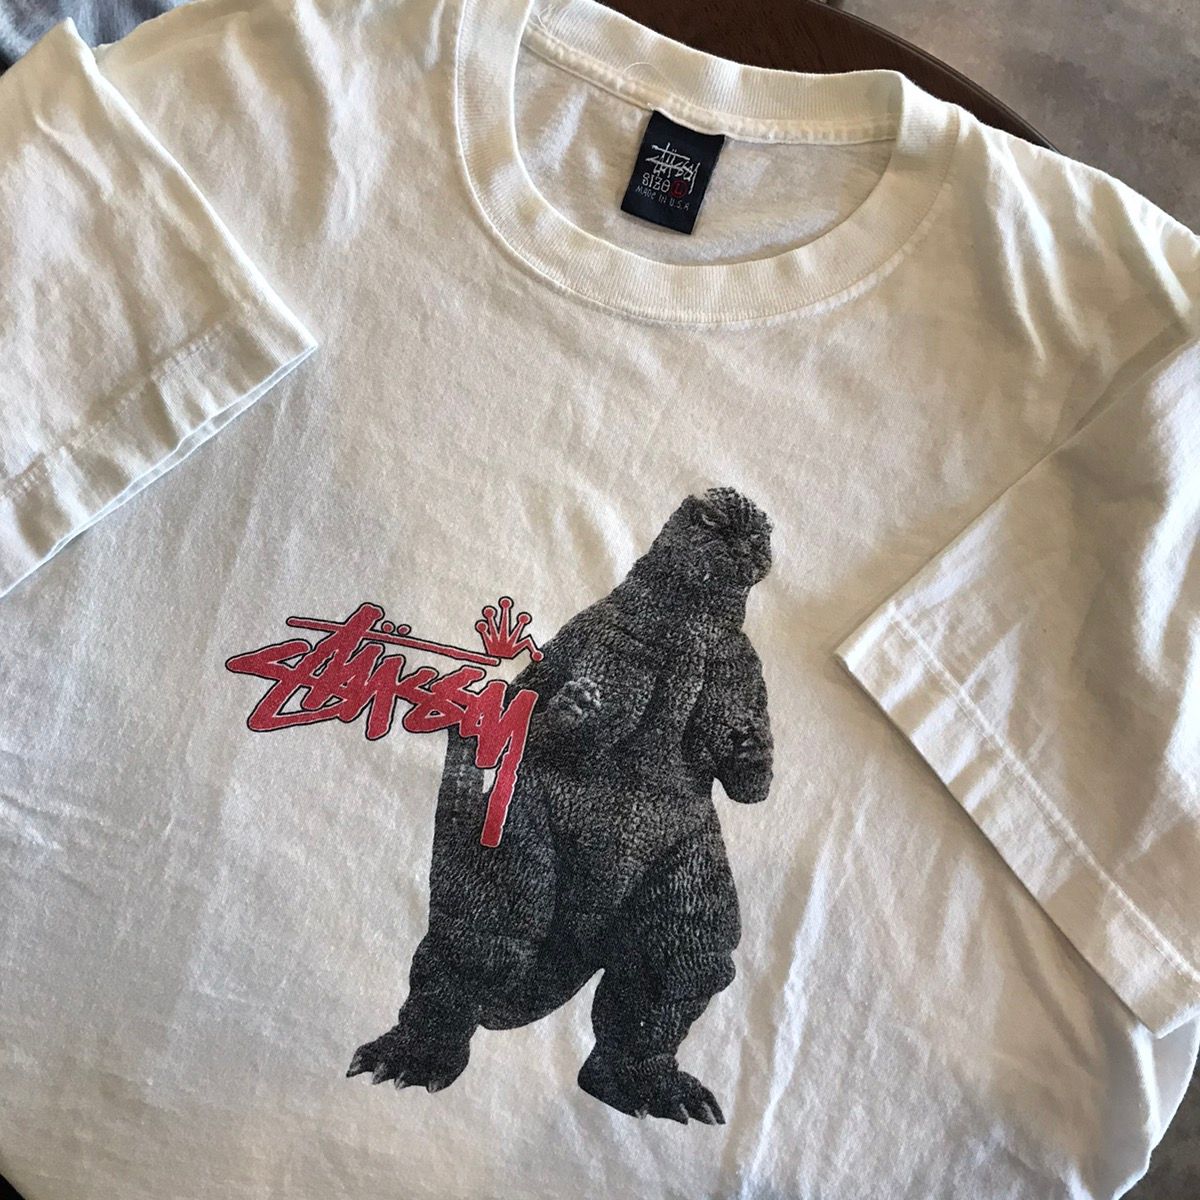 Vintage Stussy Godzilla photo print T shirt Size L/XL - 1